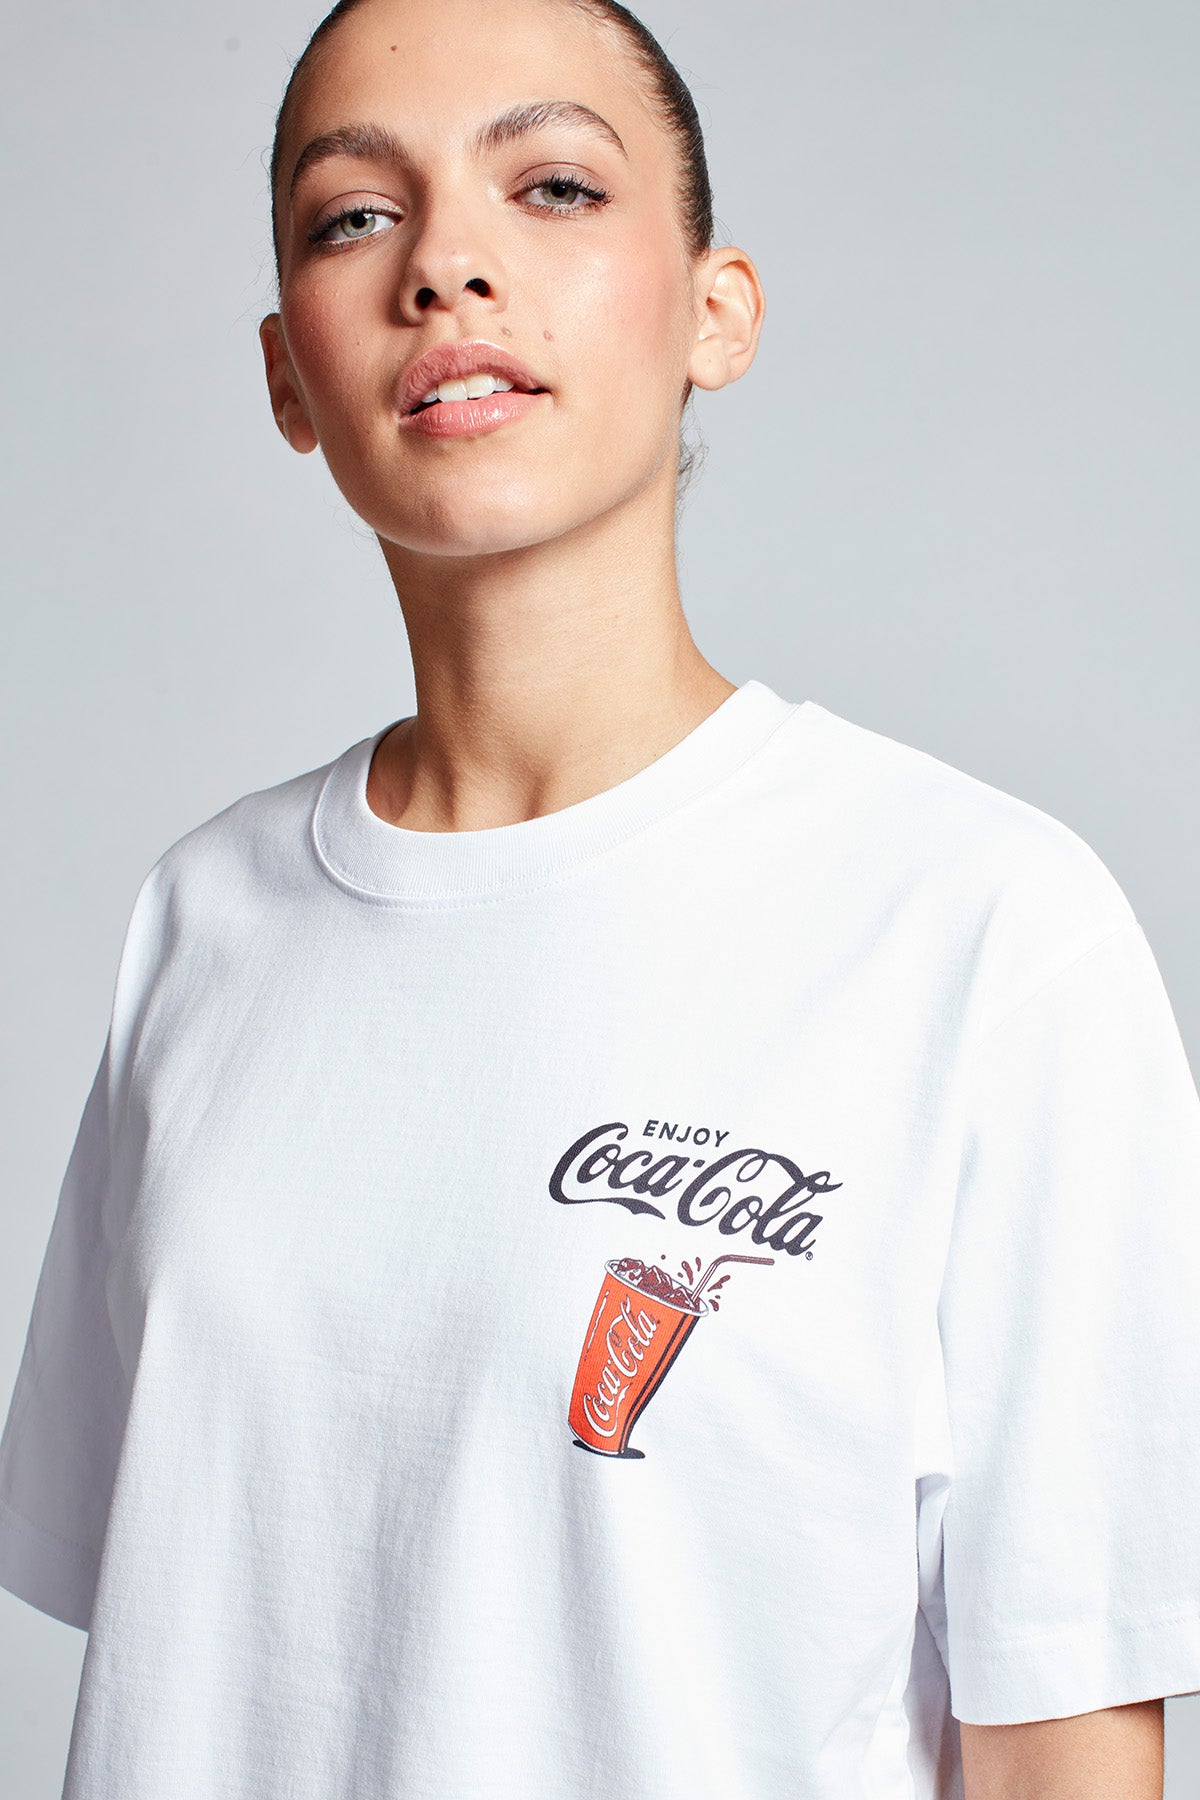 Coca-Cola Spillage T-shirt in White